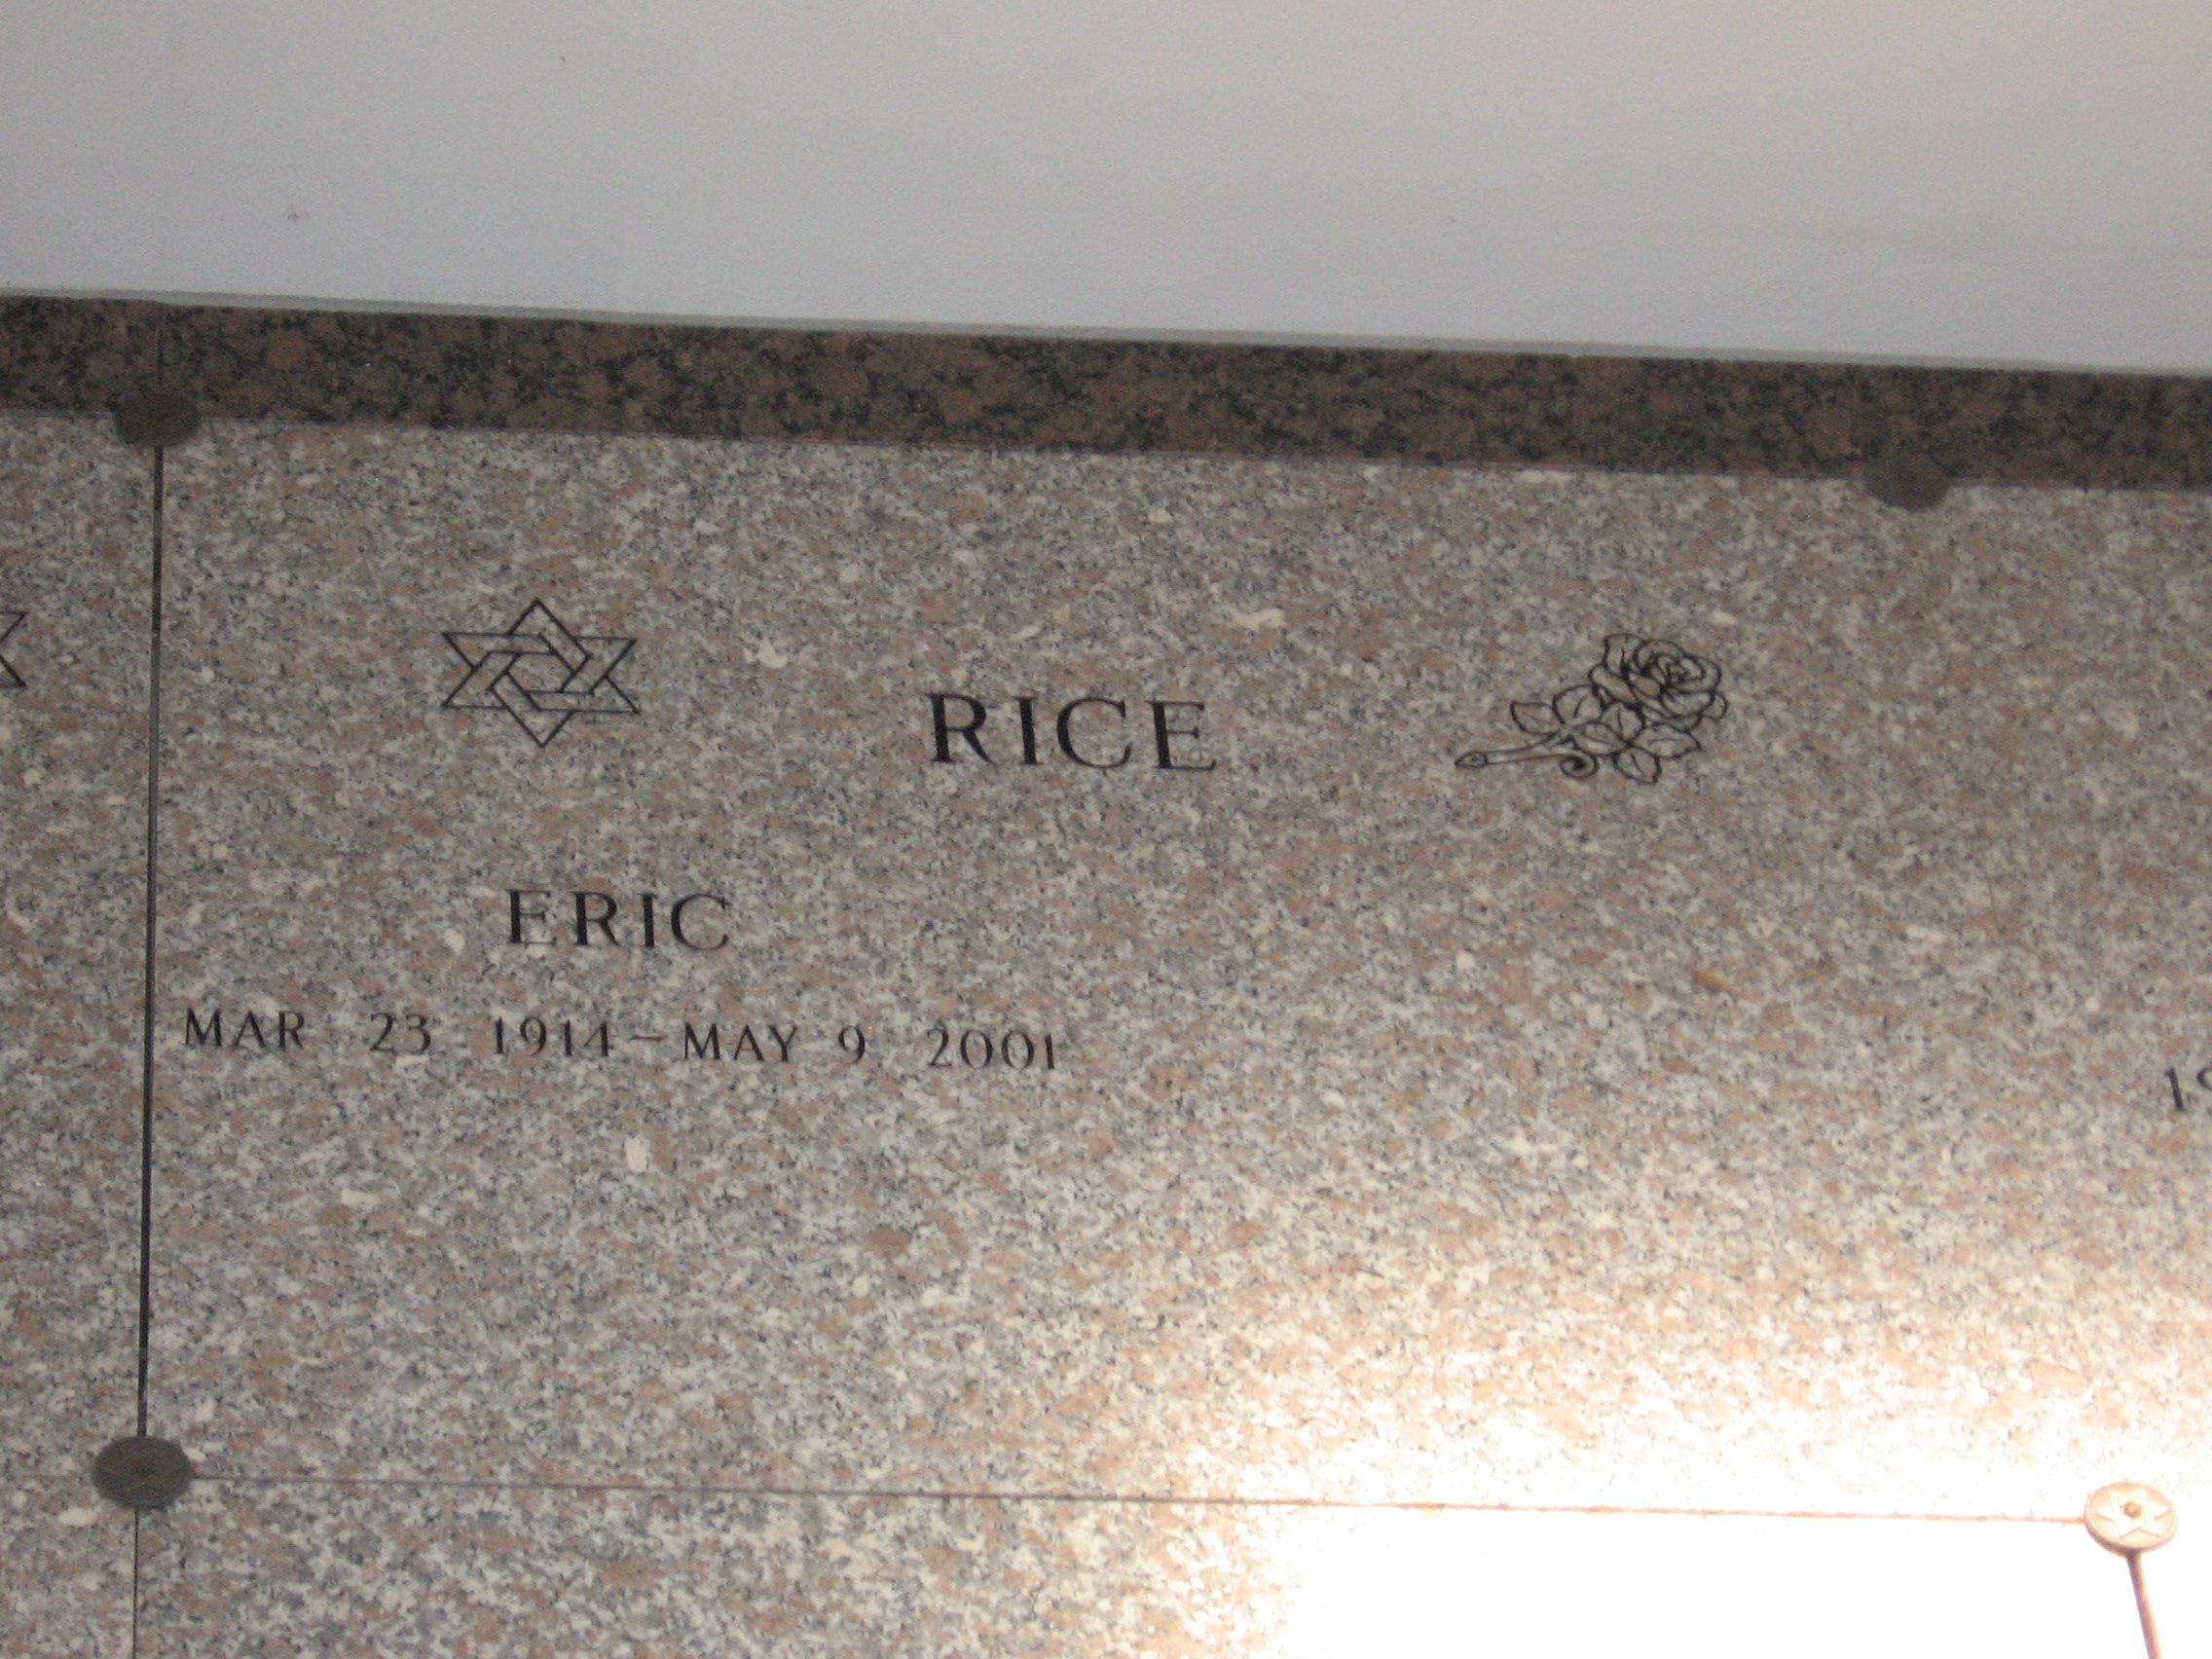 Eric Rice